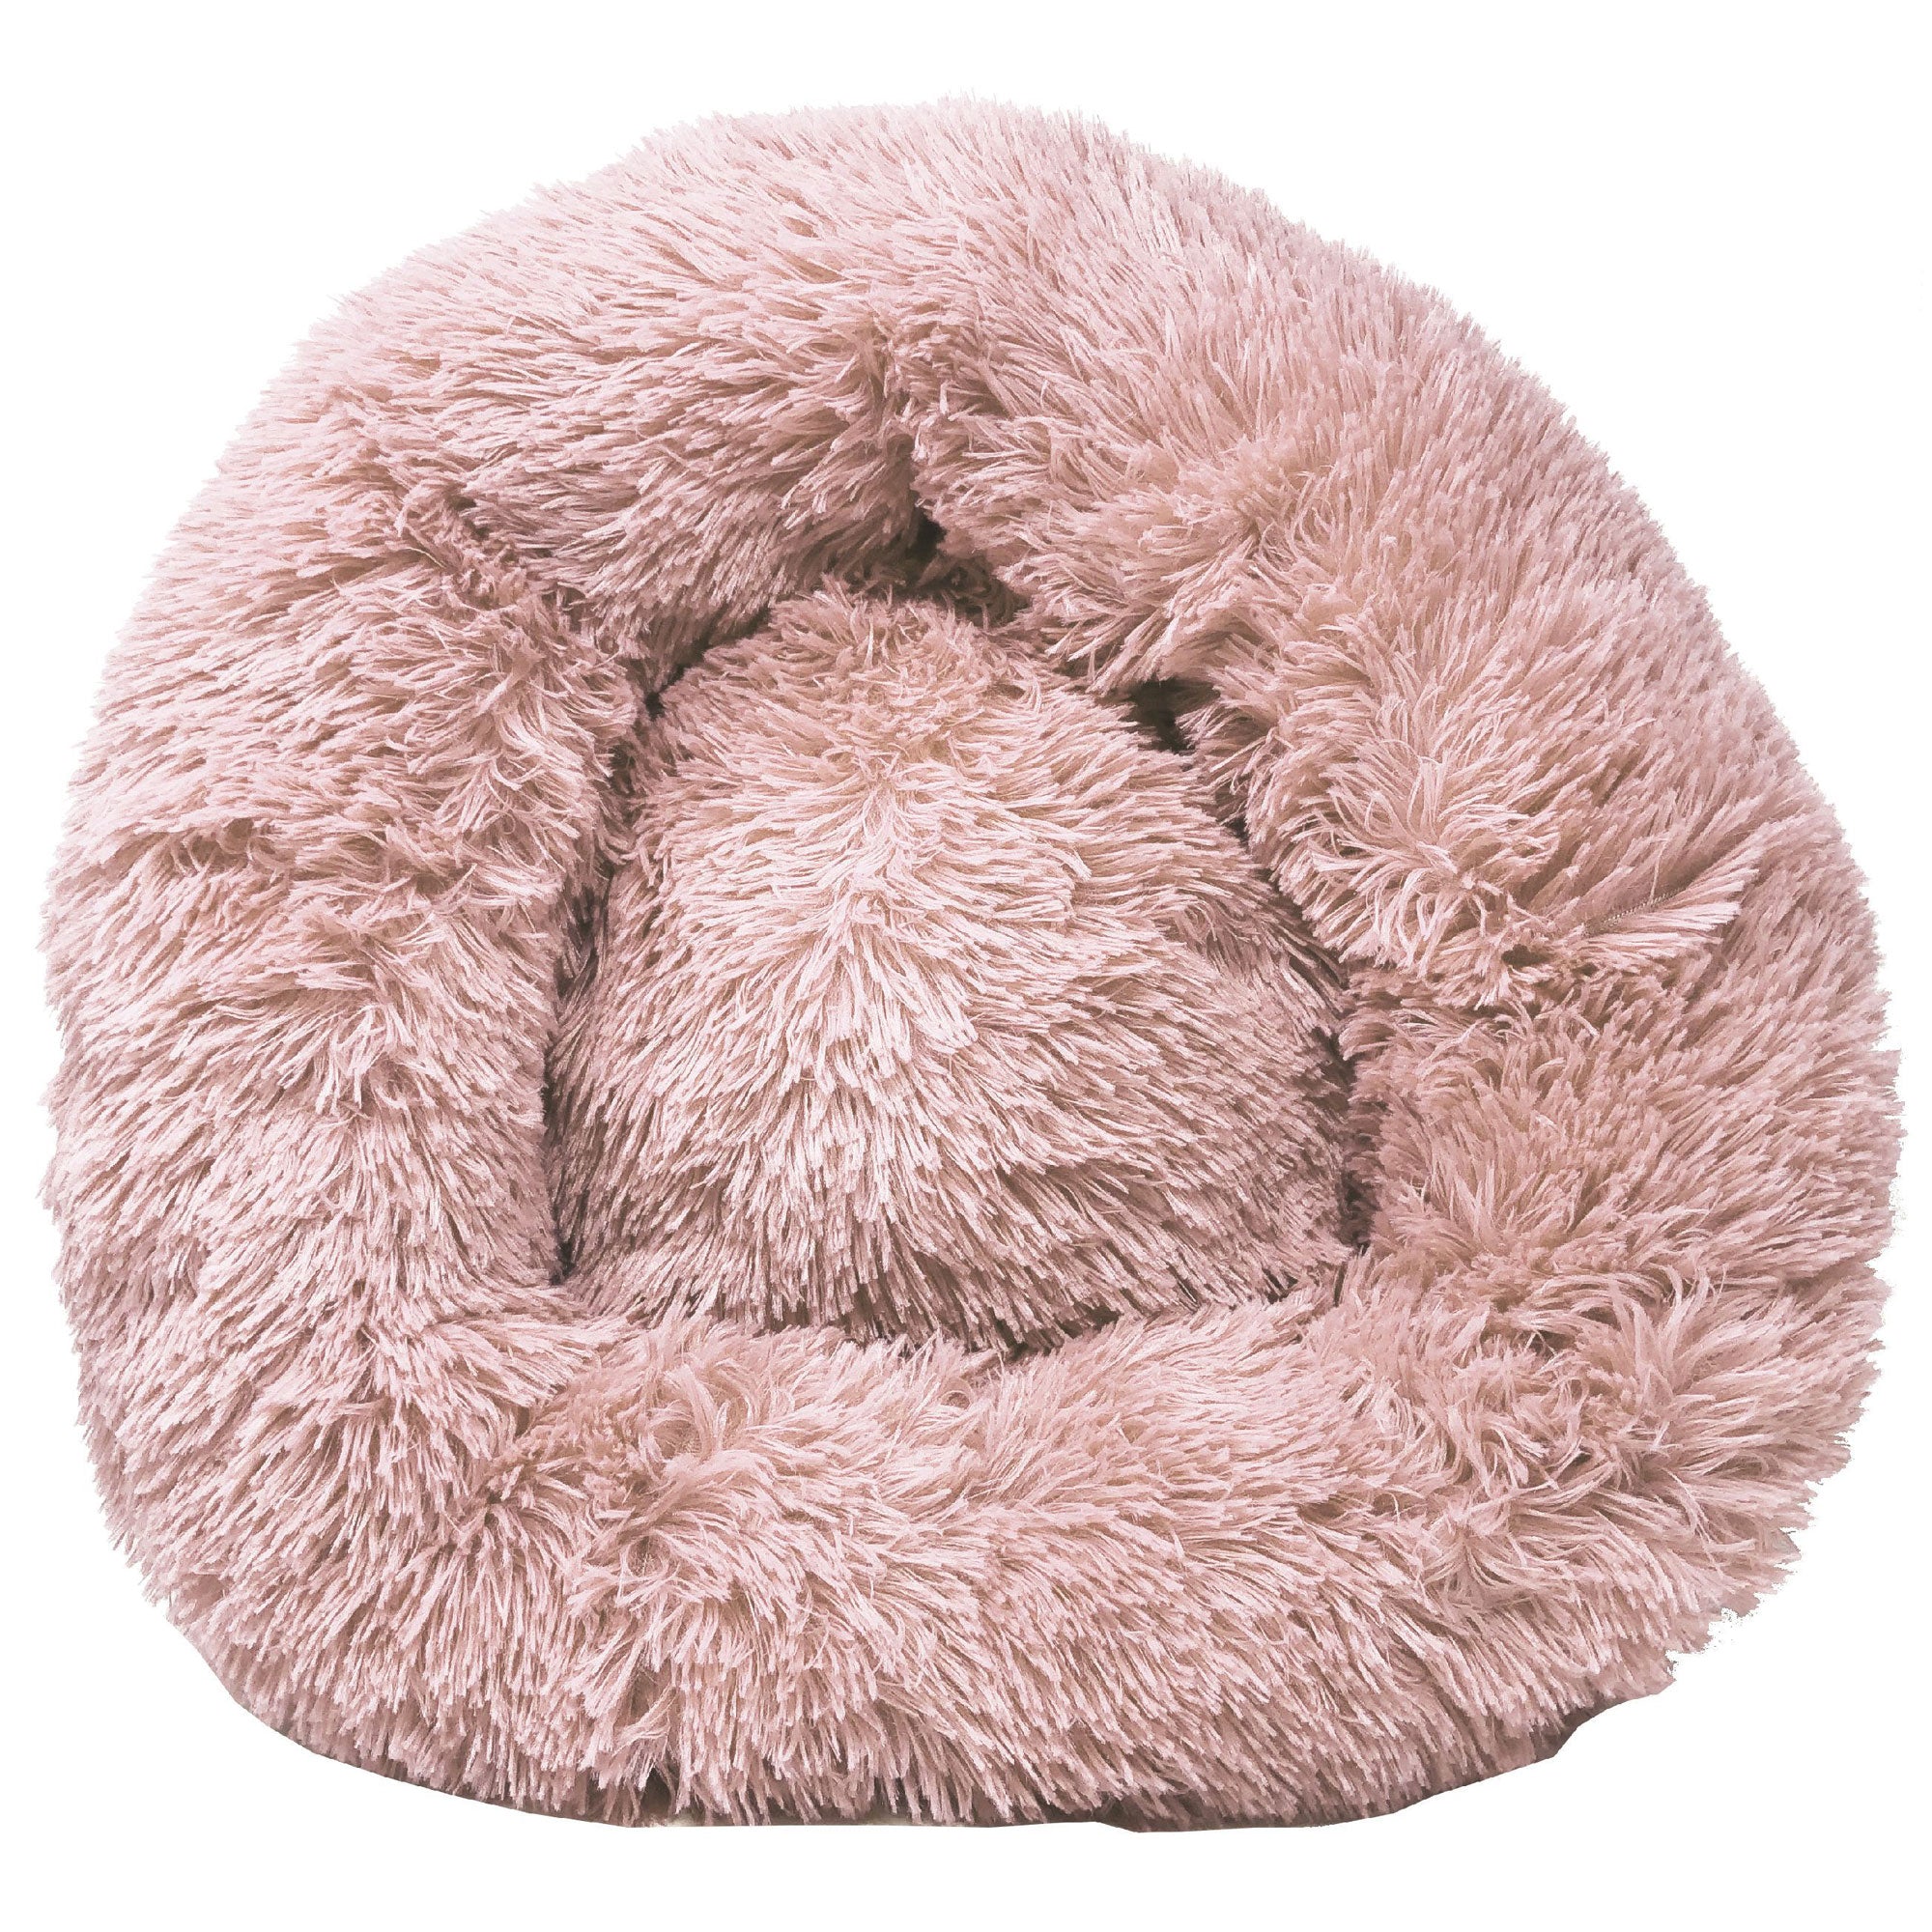 Pet Life Nestler Plush & Soft Dog Bed - Pink - Large